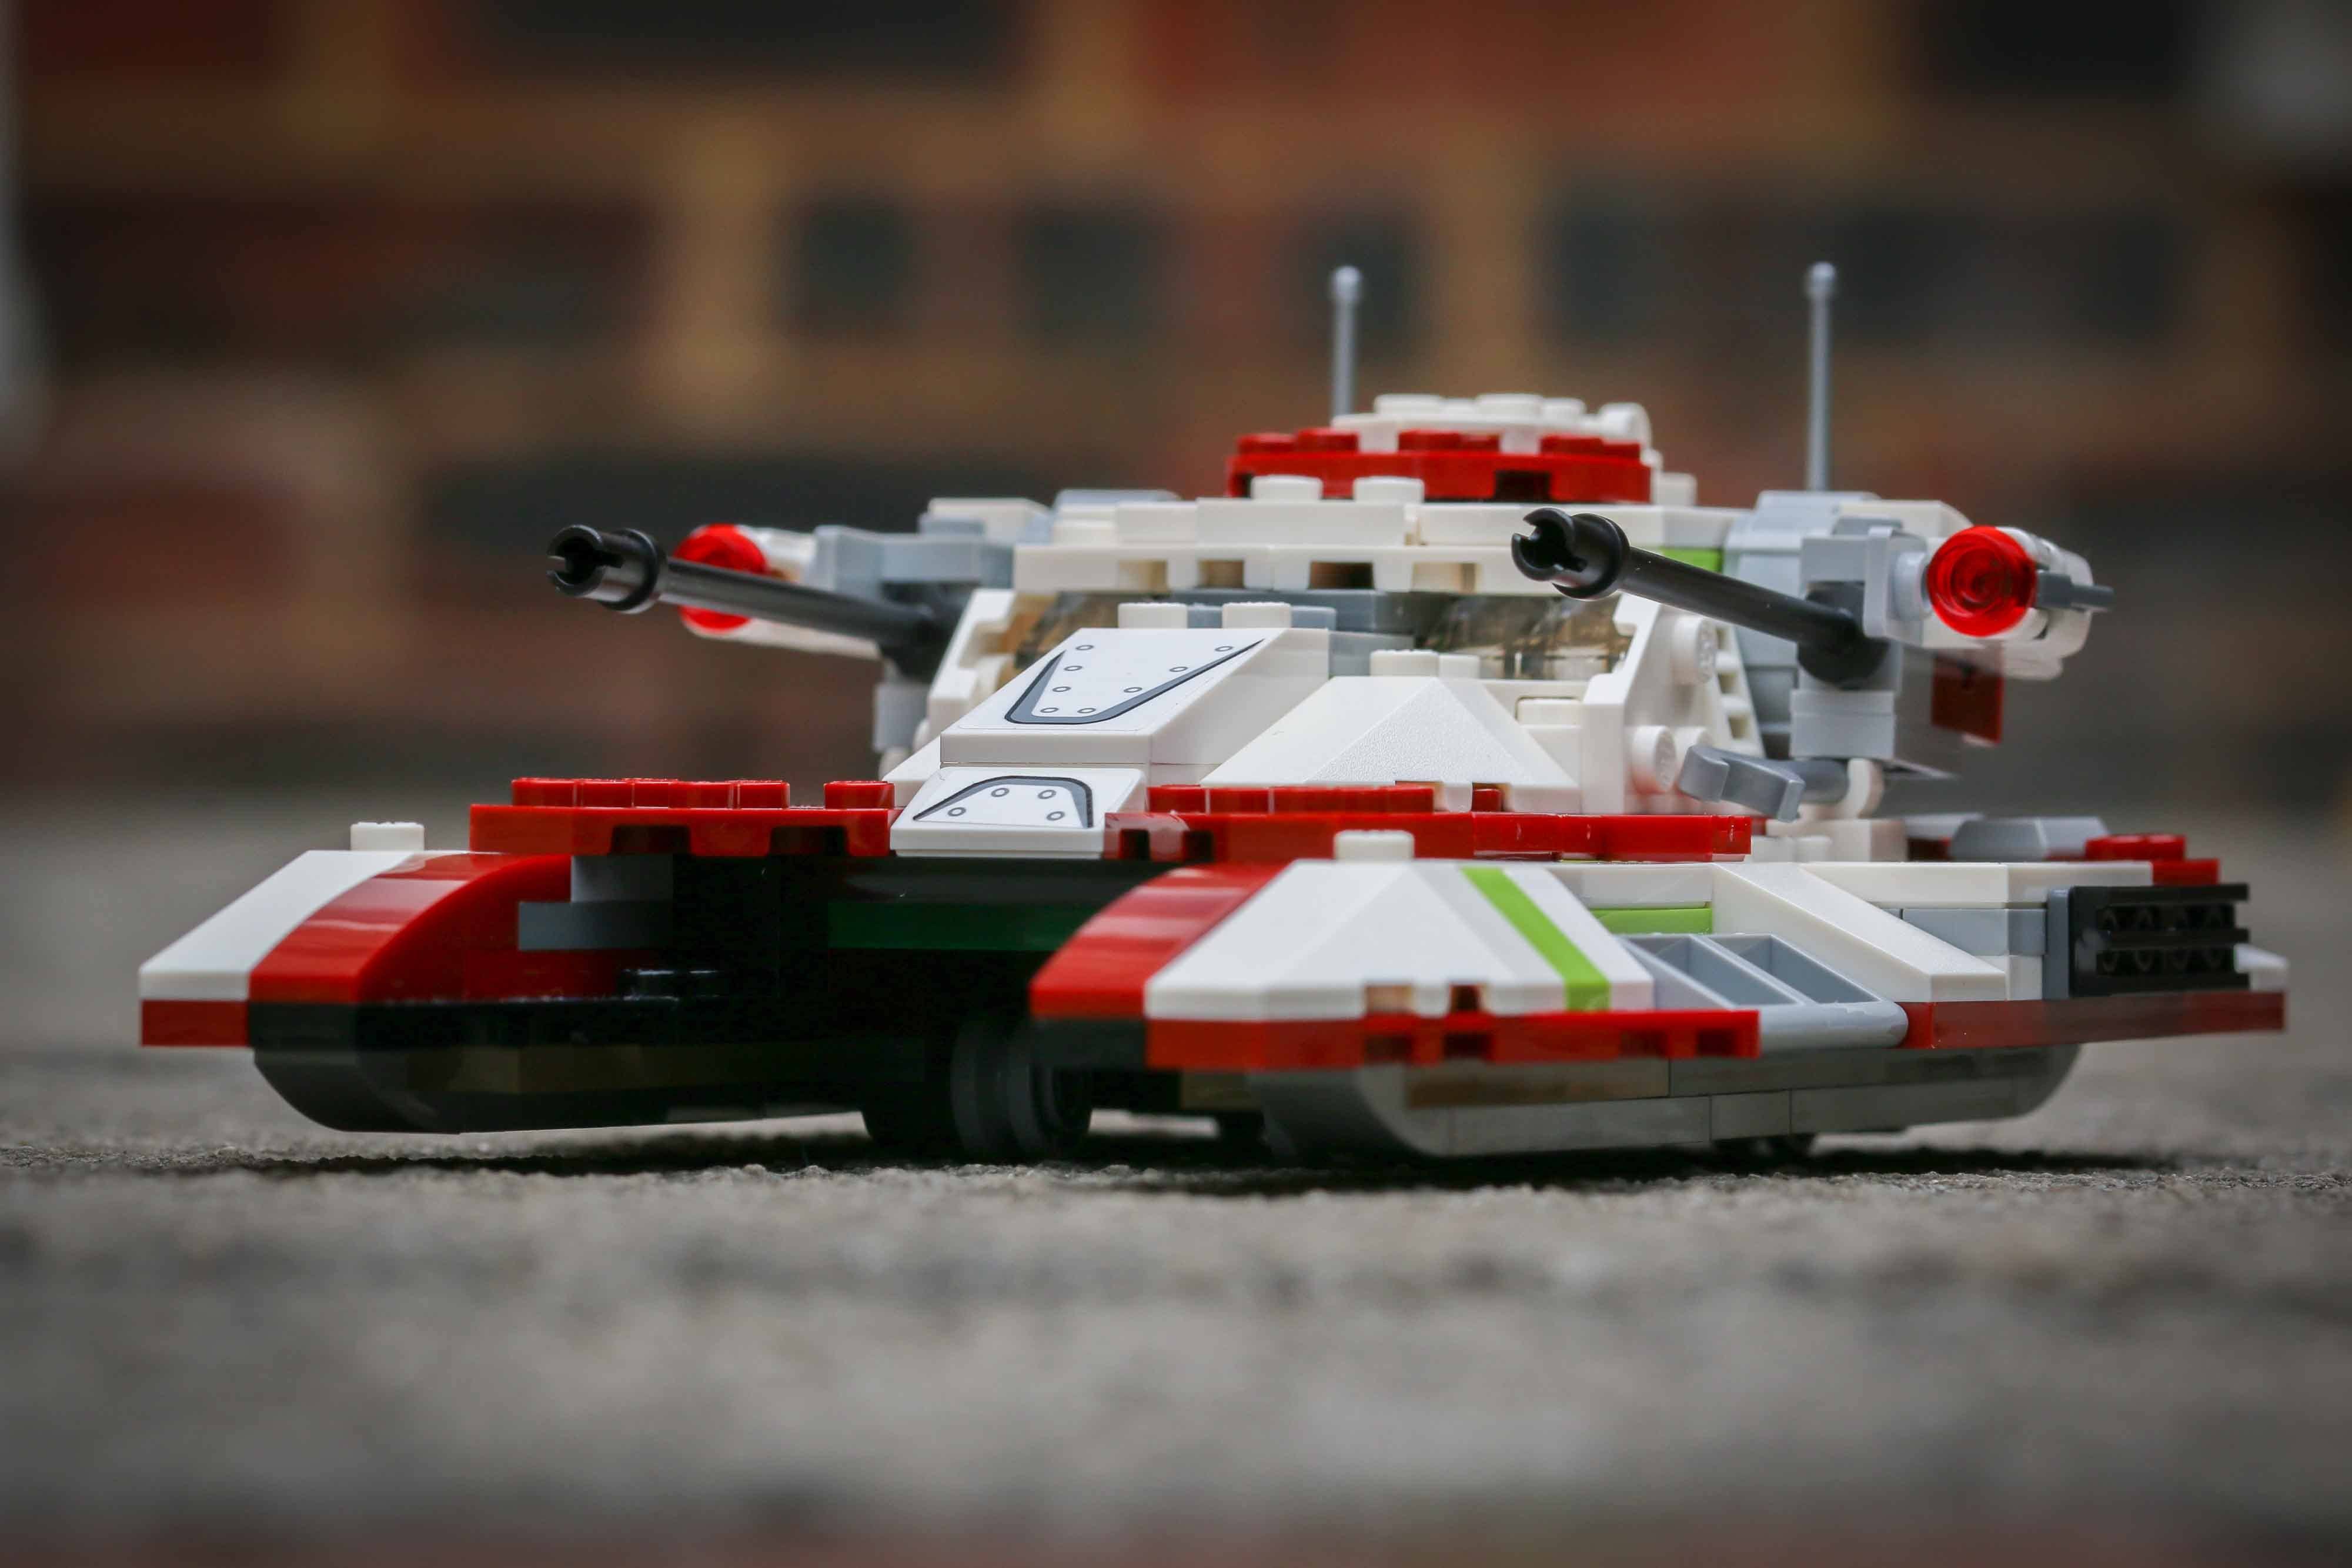 Lego Star Wars Republic Tank